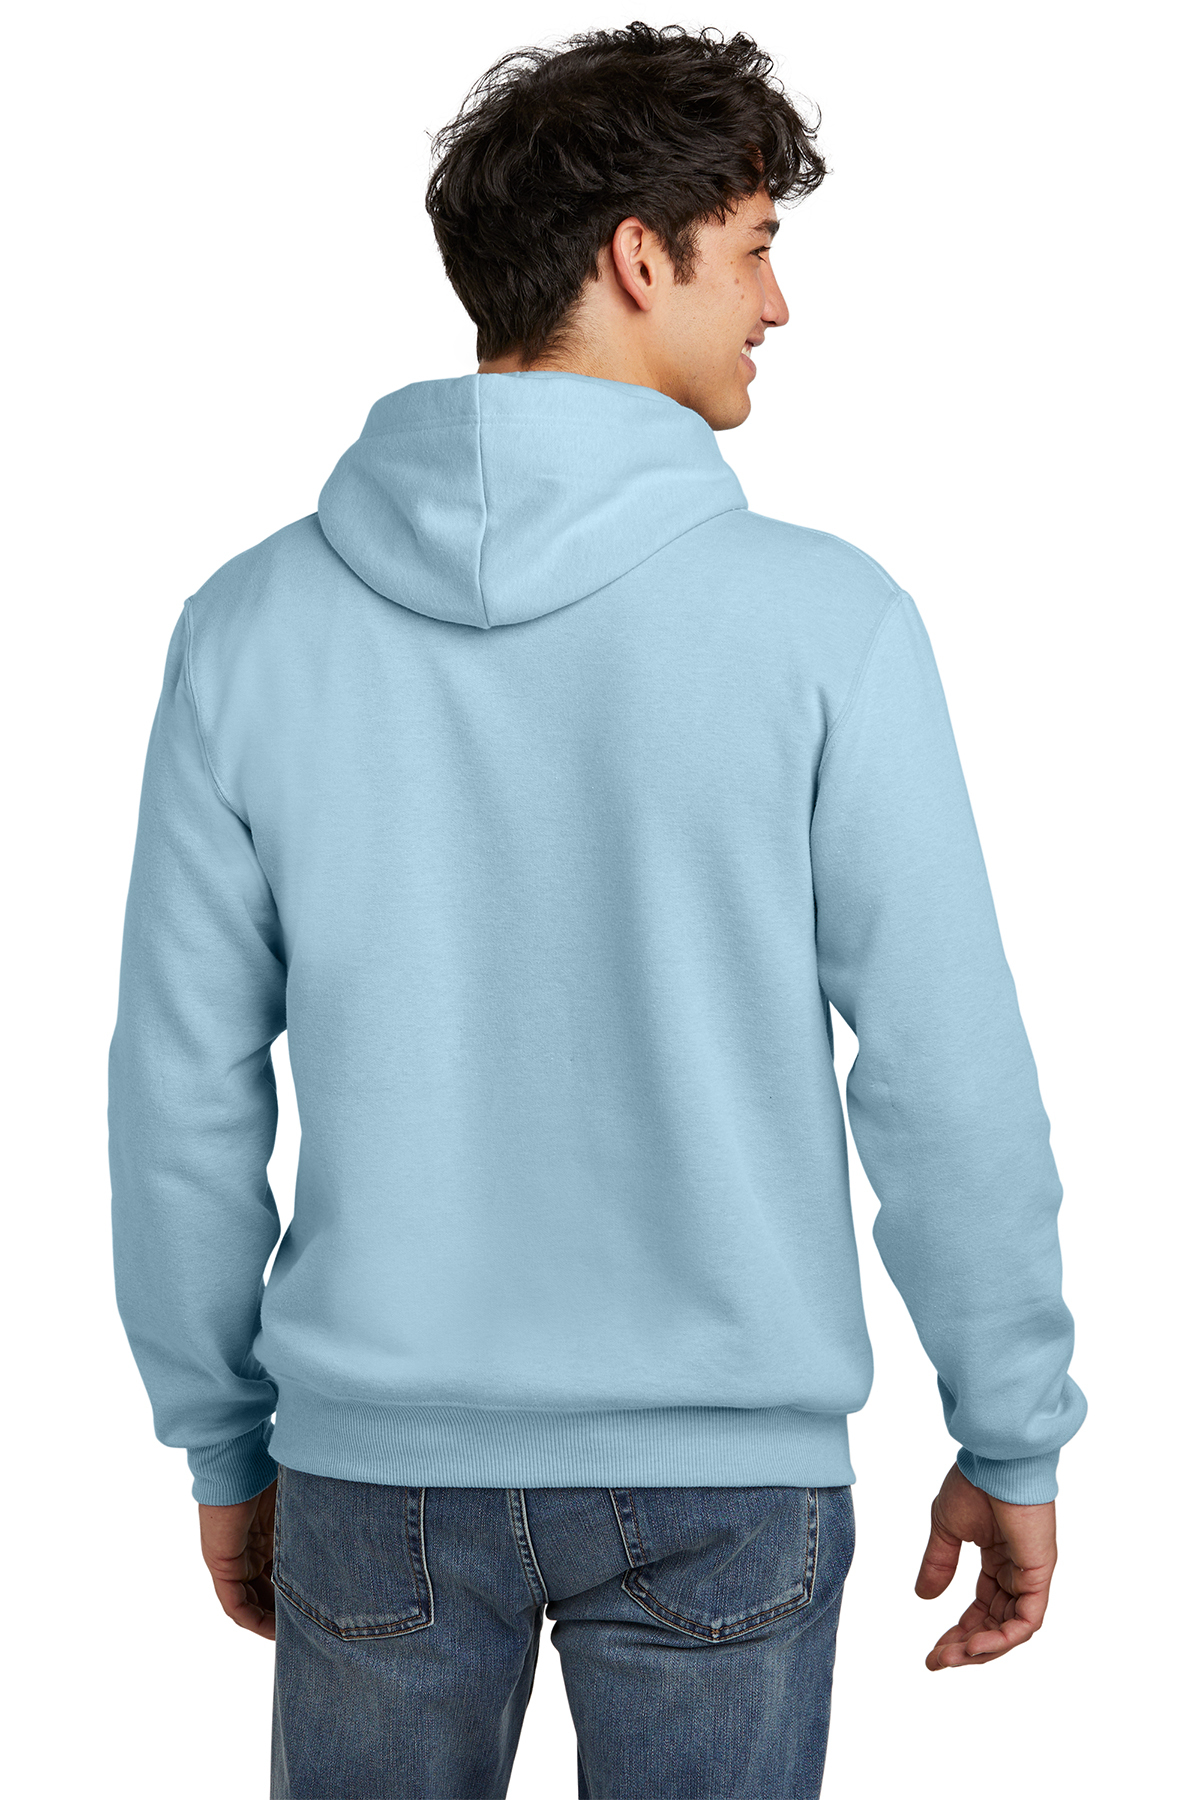 Jerzees Eco Premium Blend Pullover Hooded Sweatshirt